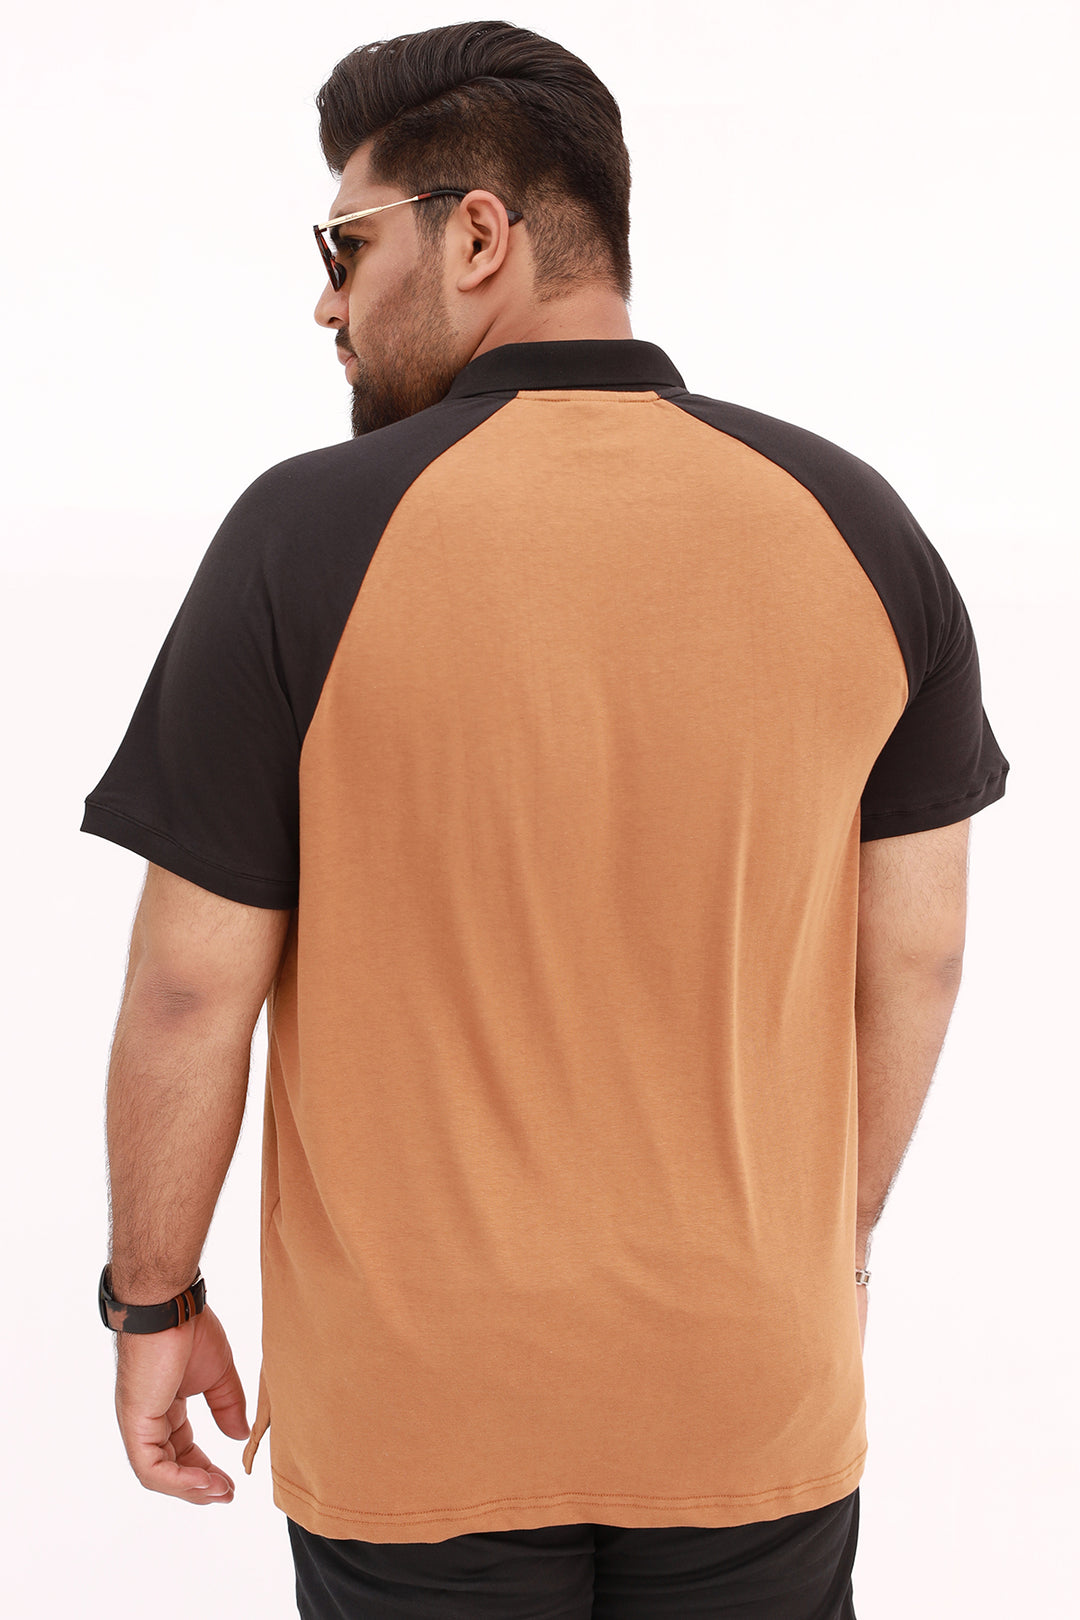 Cocoa Brown & Black Raglan Polo Shirt (Plus Size) - S22 - MP0116P